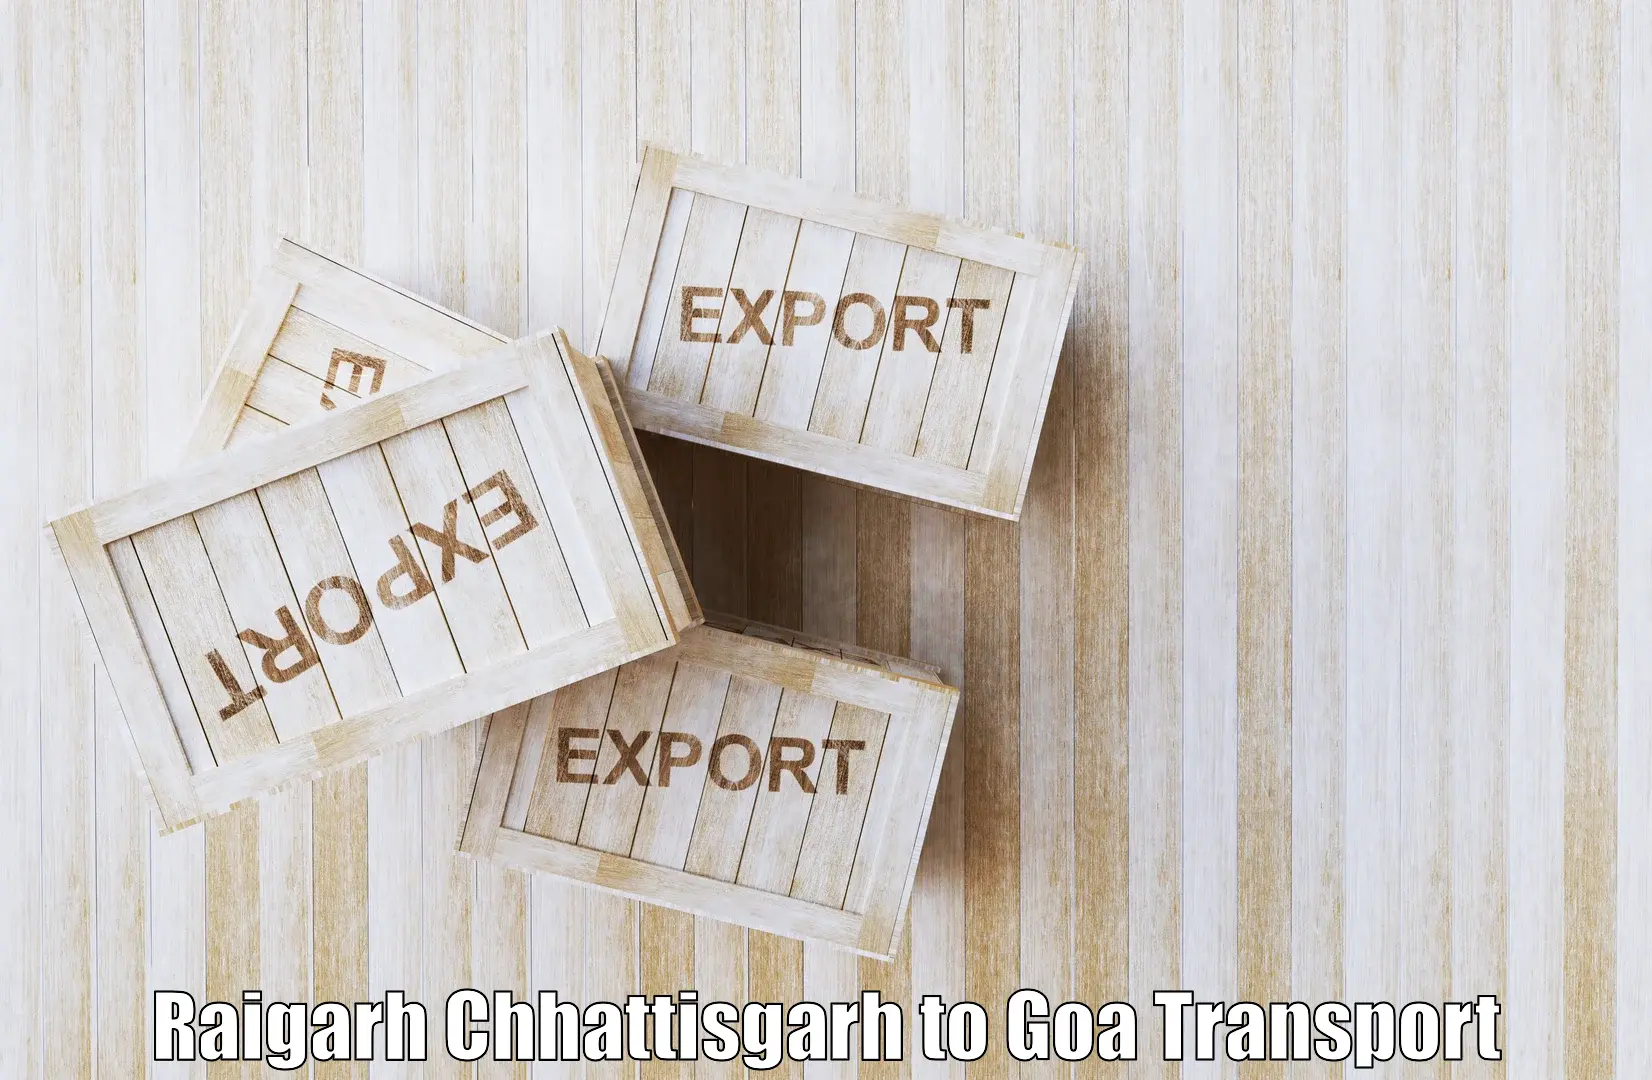 Two wheeler parcel service in Raigarh Chhattisgarh to Goa